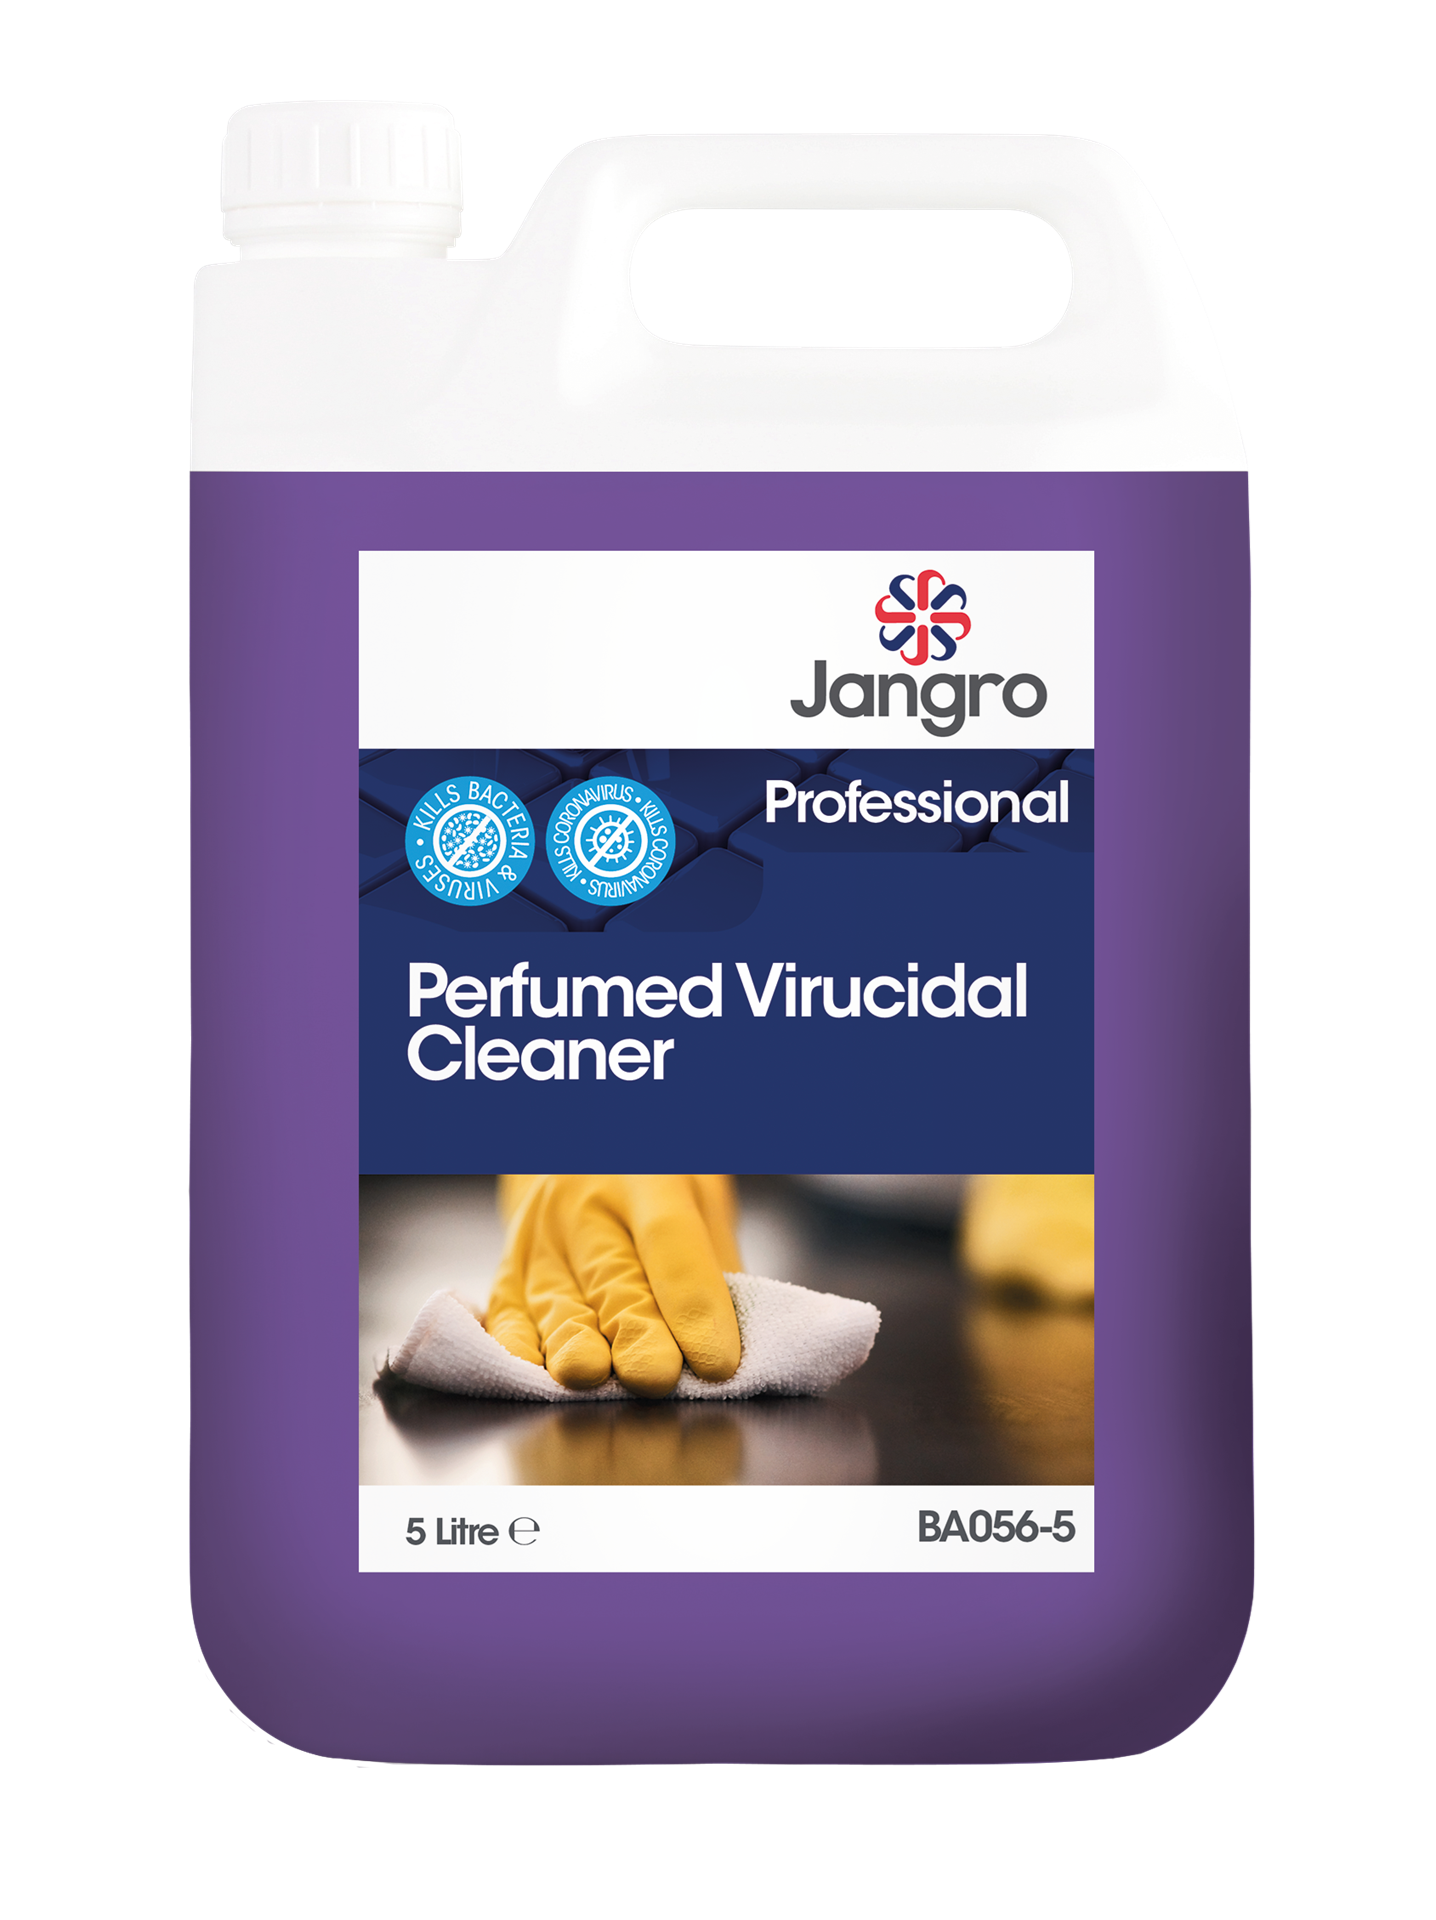 Jangro Professional Perfumed Virucidal Cleaner, 5 Litre